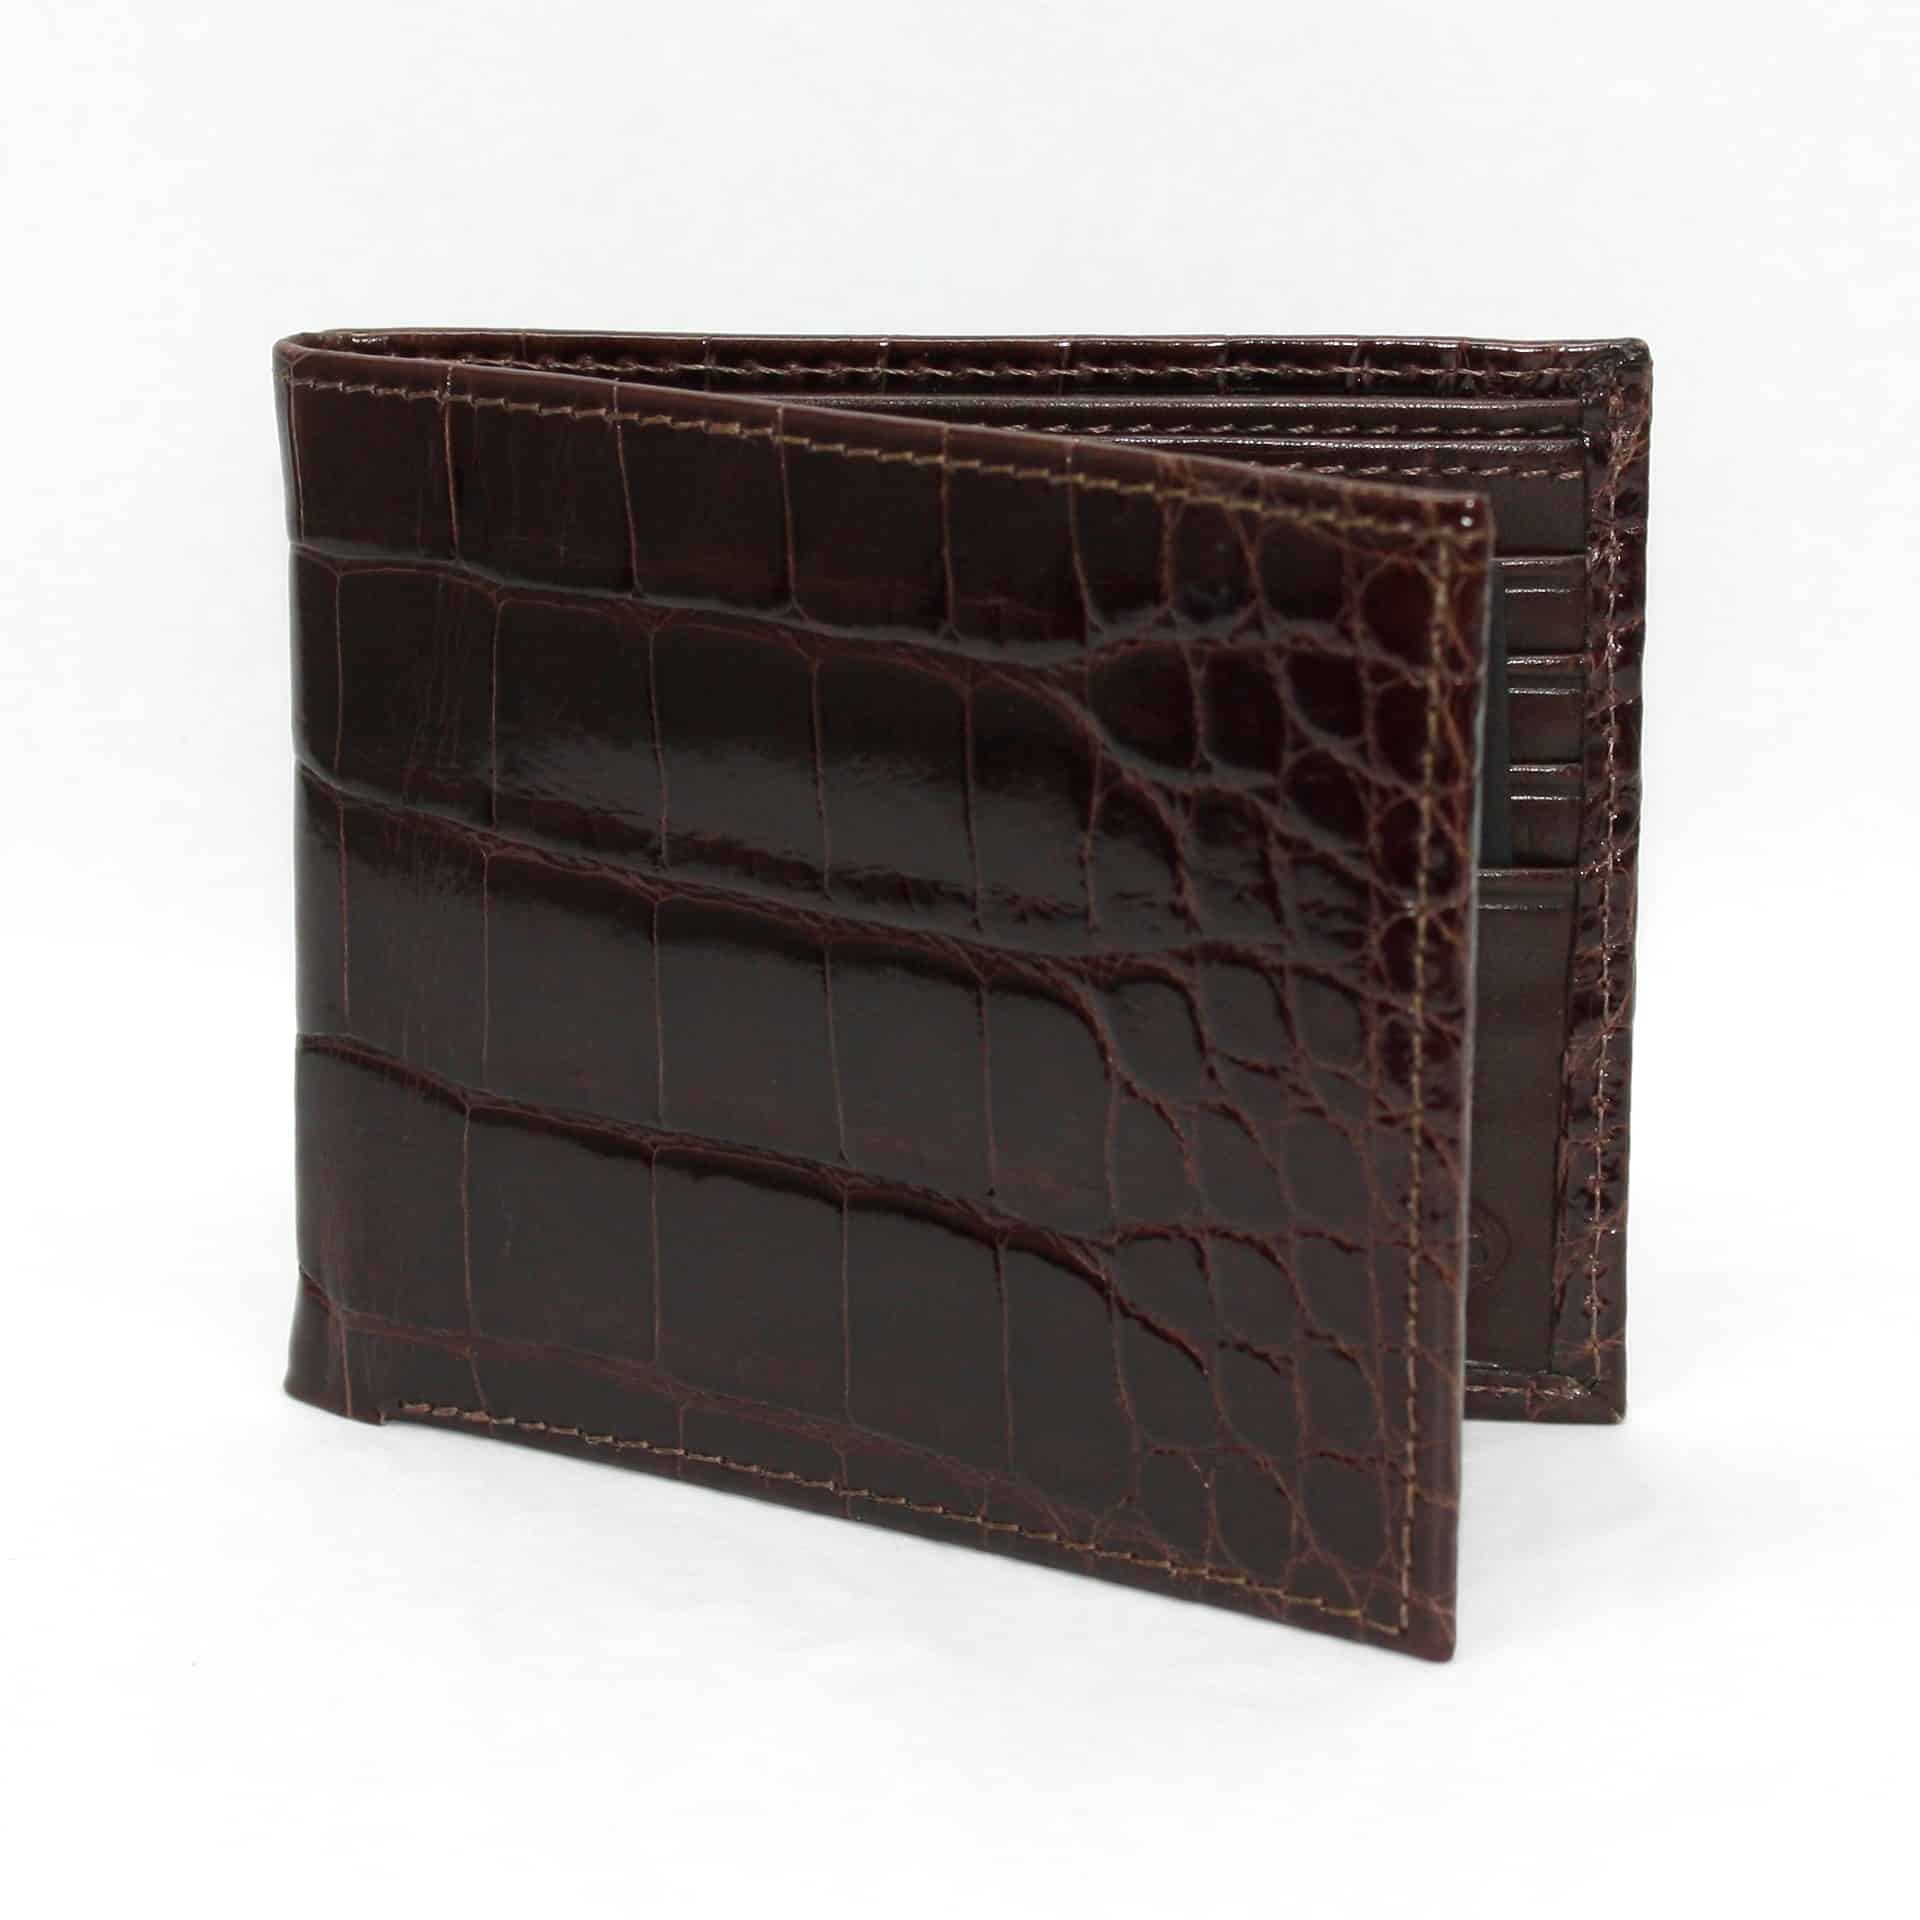 Genuine Alligator Billfold Wallet in Brown by Torino Leather